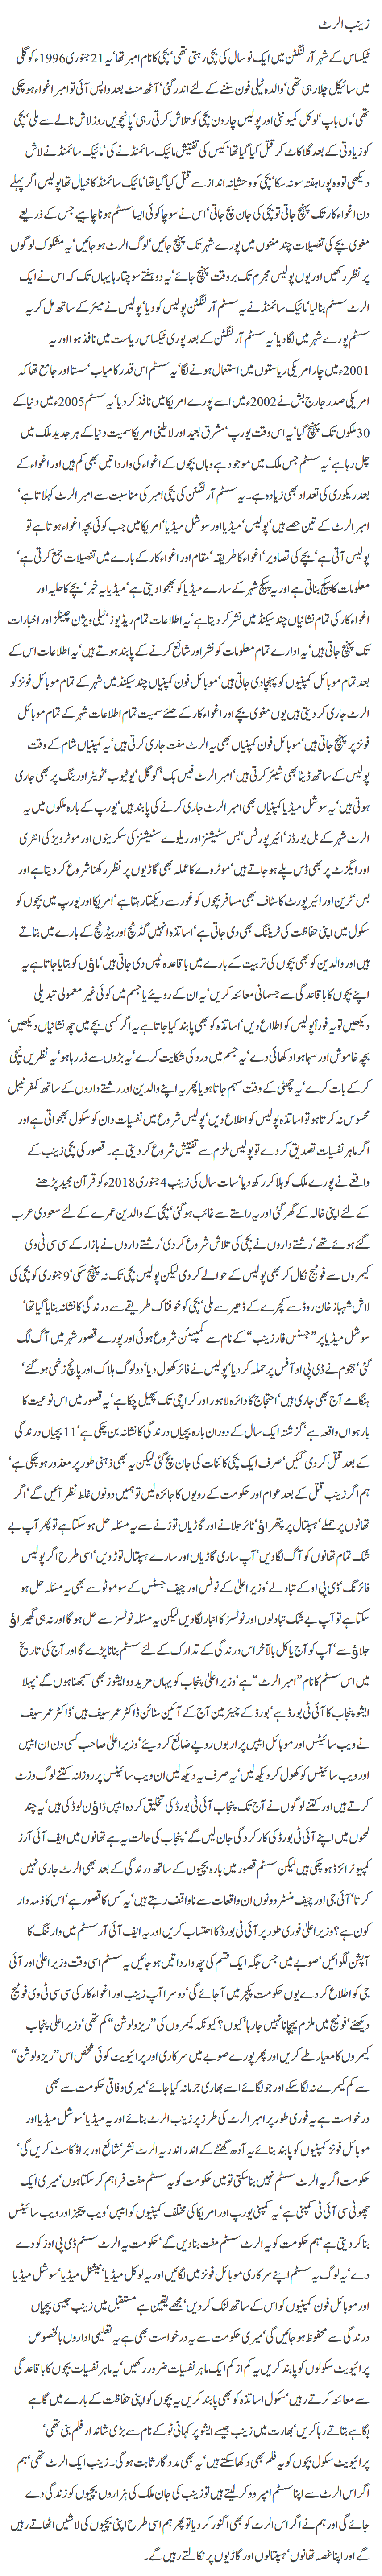 Zainab Alert By Javed Chaudhry